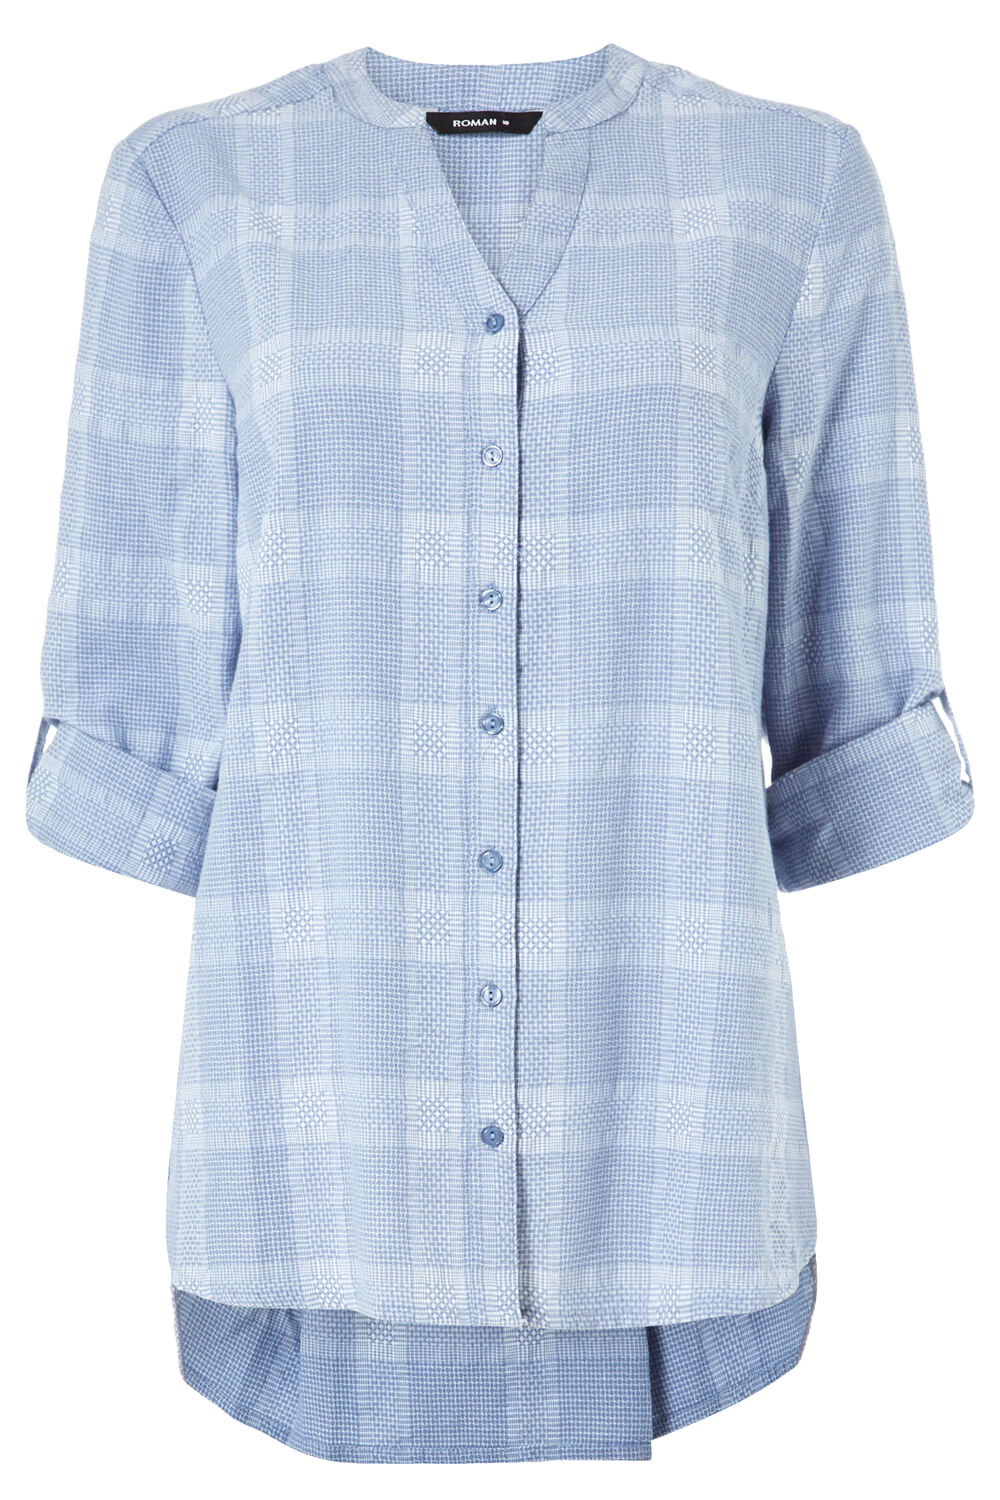 Textured Check Print Wrap Back Shirt in Blue - Roman Originals UK